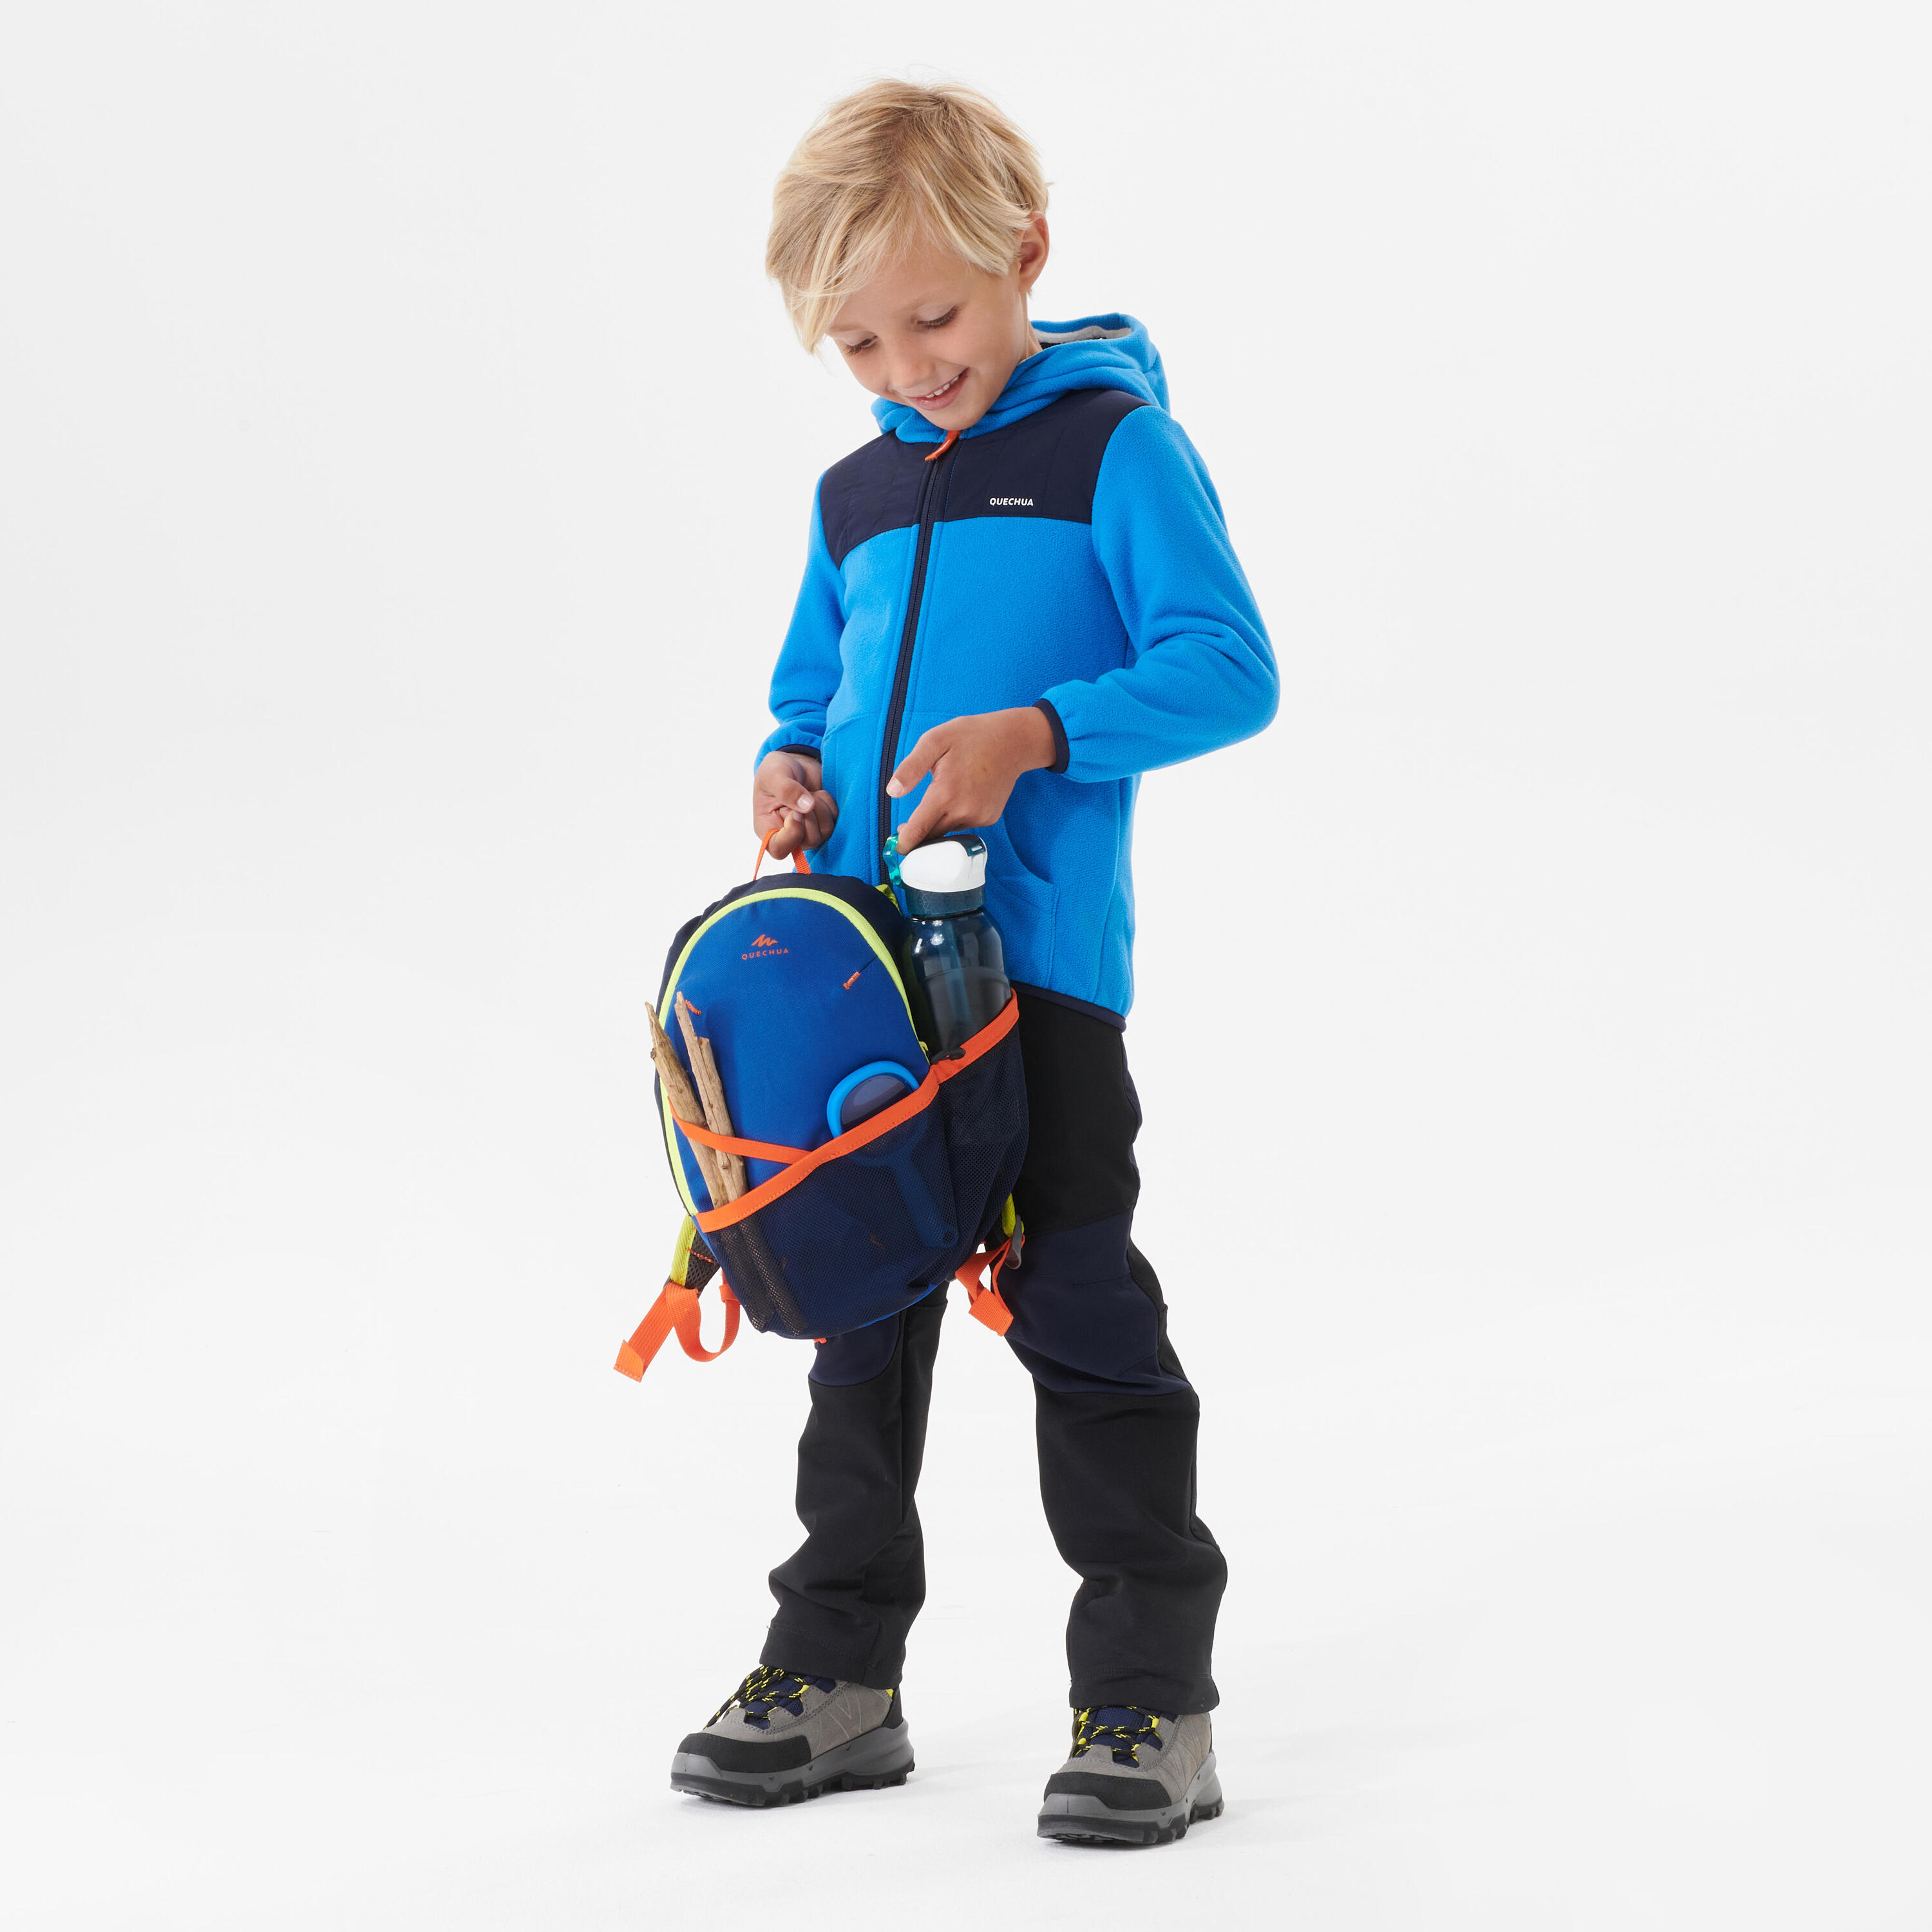 Kids’ Warm Hiking Fleece Jacket - MH500 Aged 2-6 - Blue 4/8